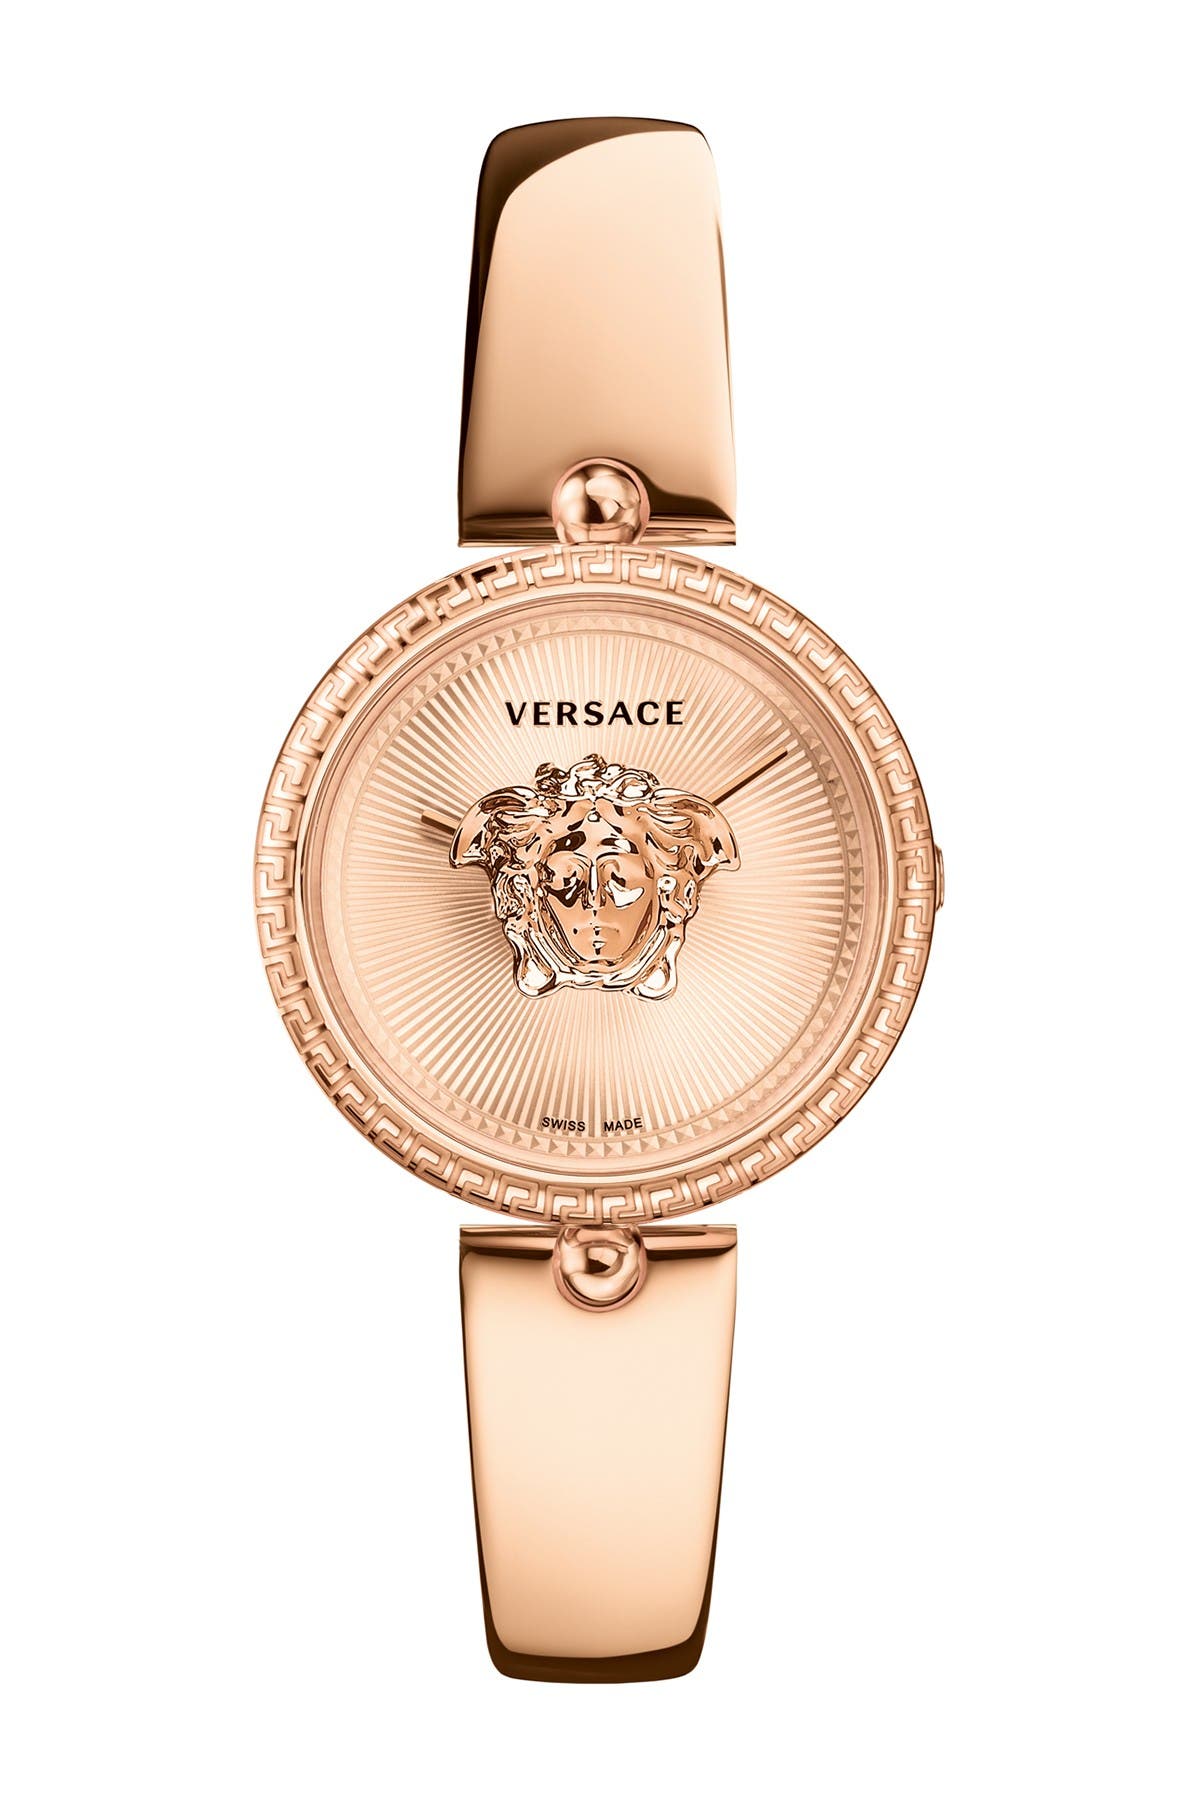 versace rose gold